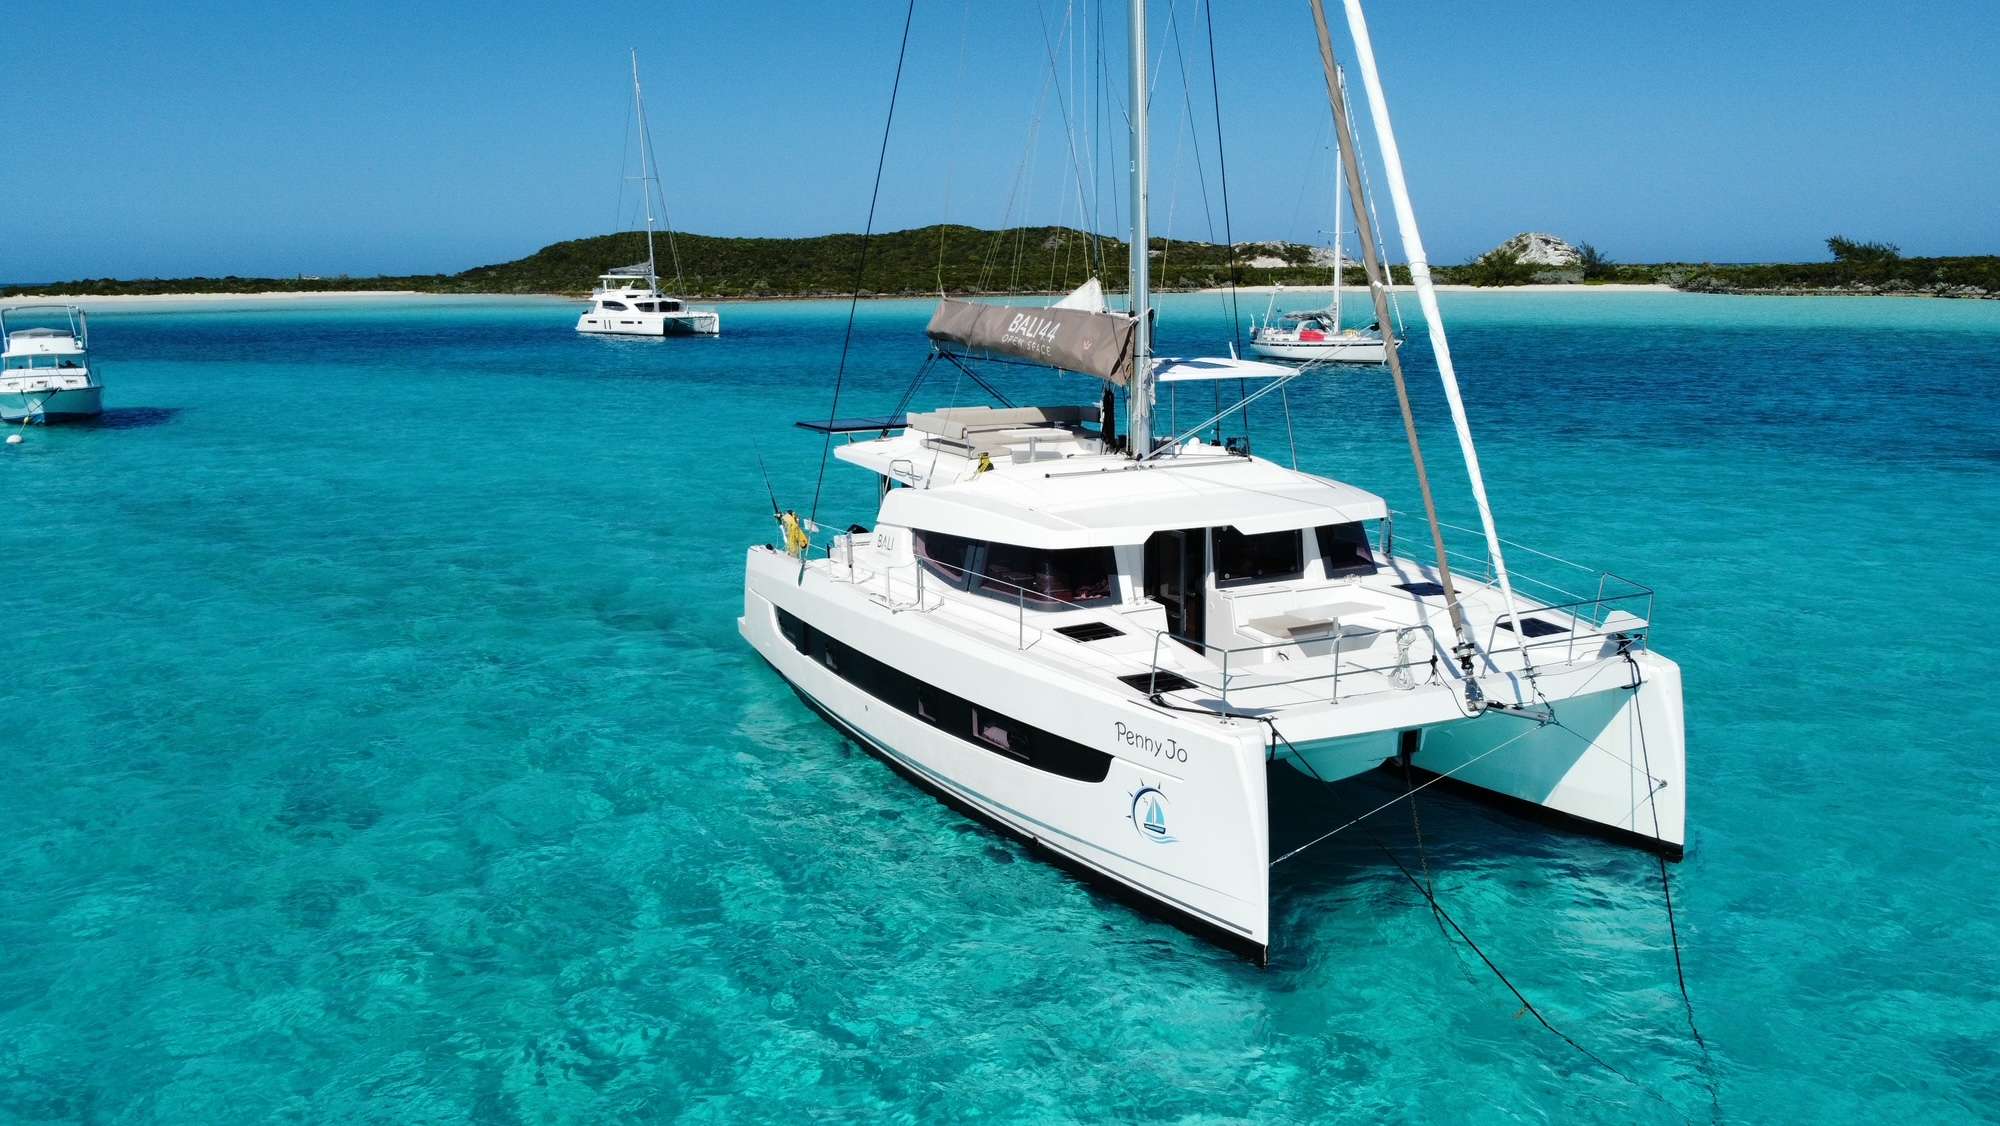 Penny Jo Crewed Bali 4.4 Catamaran Charters Sailing the Bahamas